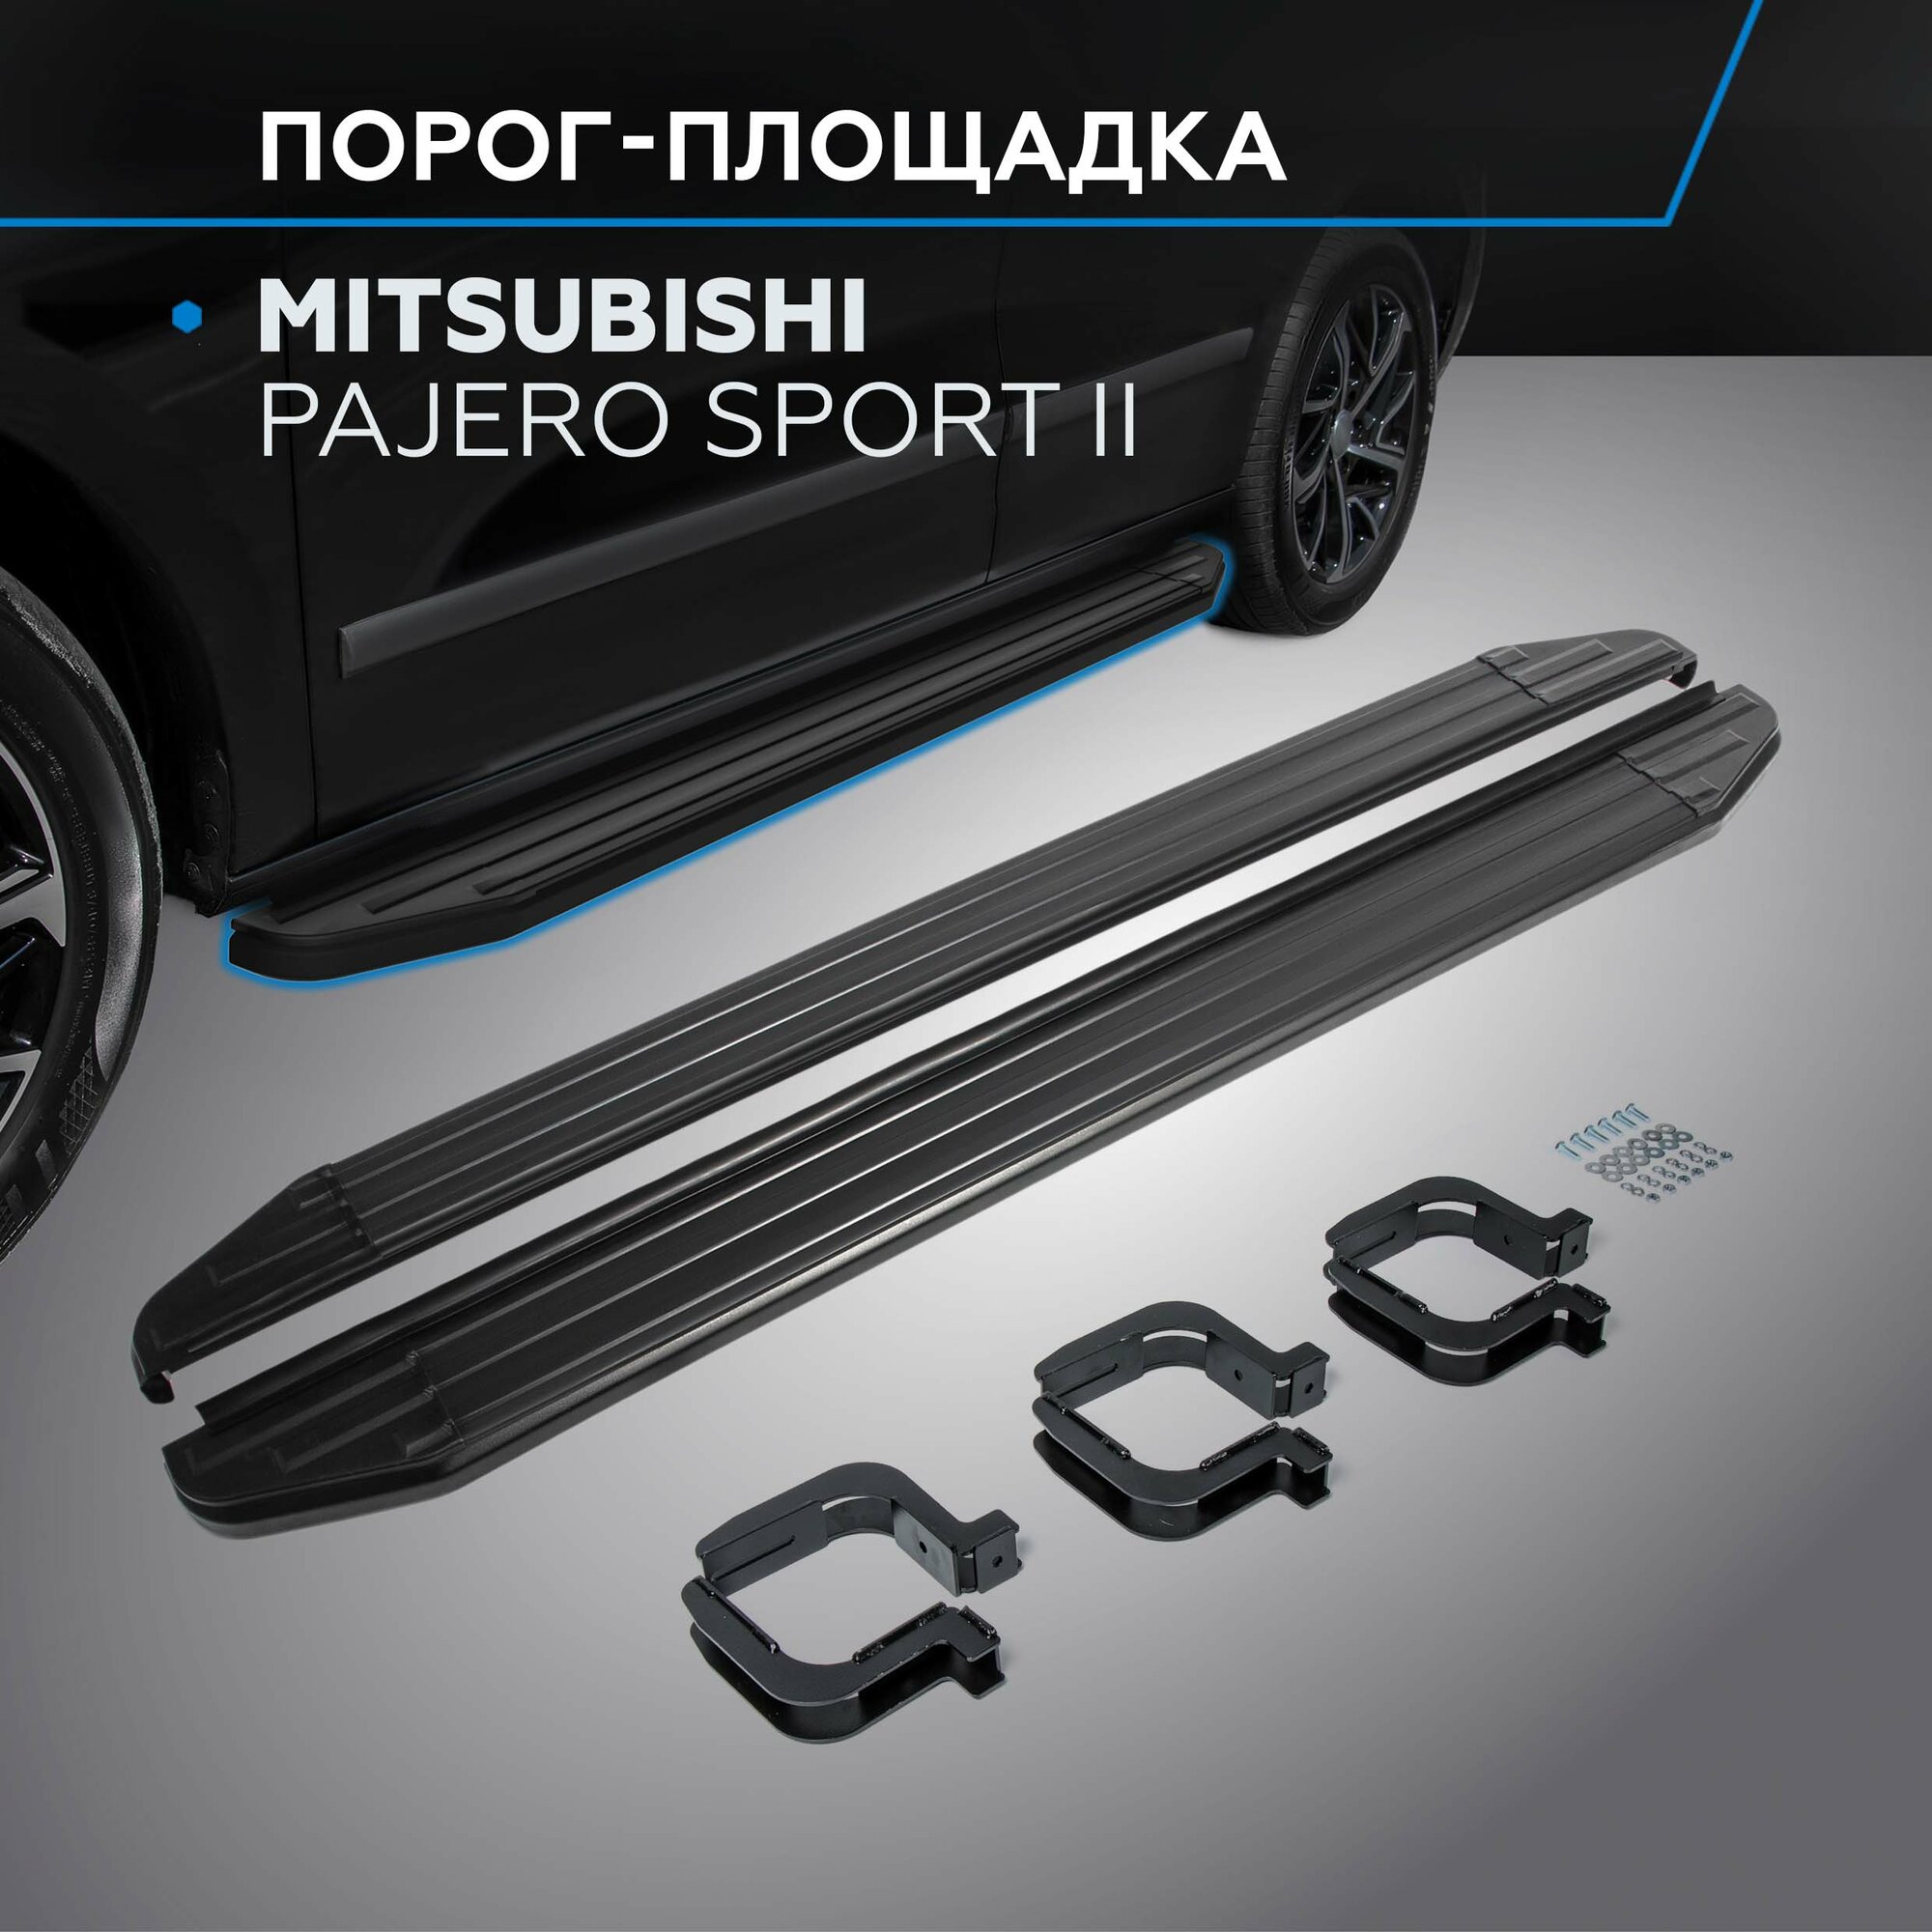 Пороги на автомобиль "Premium-Black" Rival для Mitsubishi Pajero Sport II 2008-2016 173 см 2 шт алюминий A173ALB.4003.1